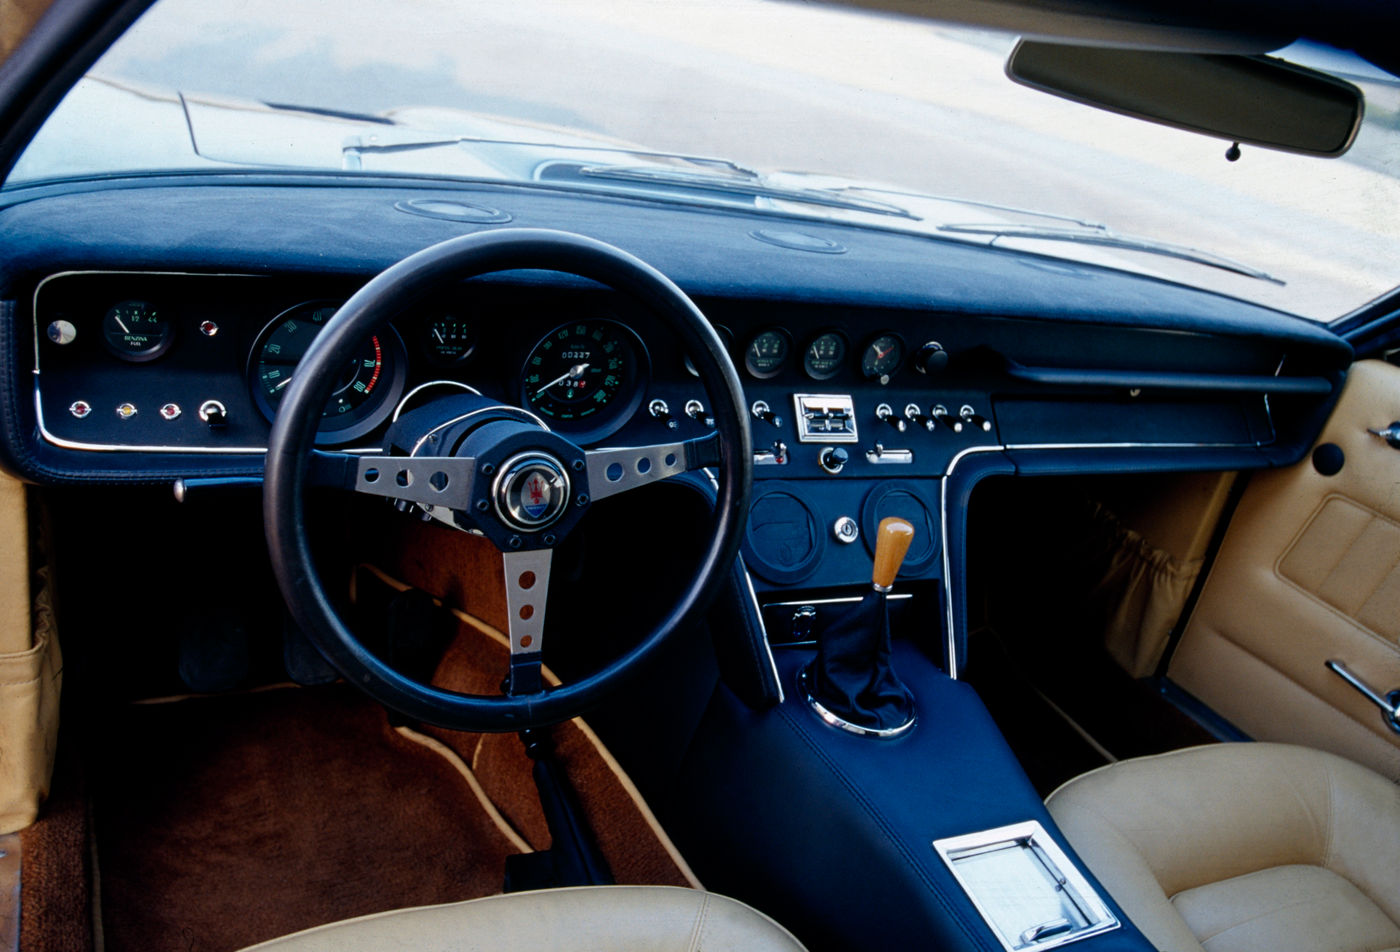 1966 Maserati Ghibli - interior view of the classic 2-door coupe